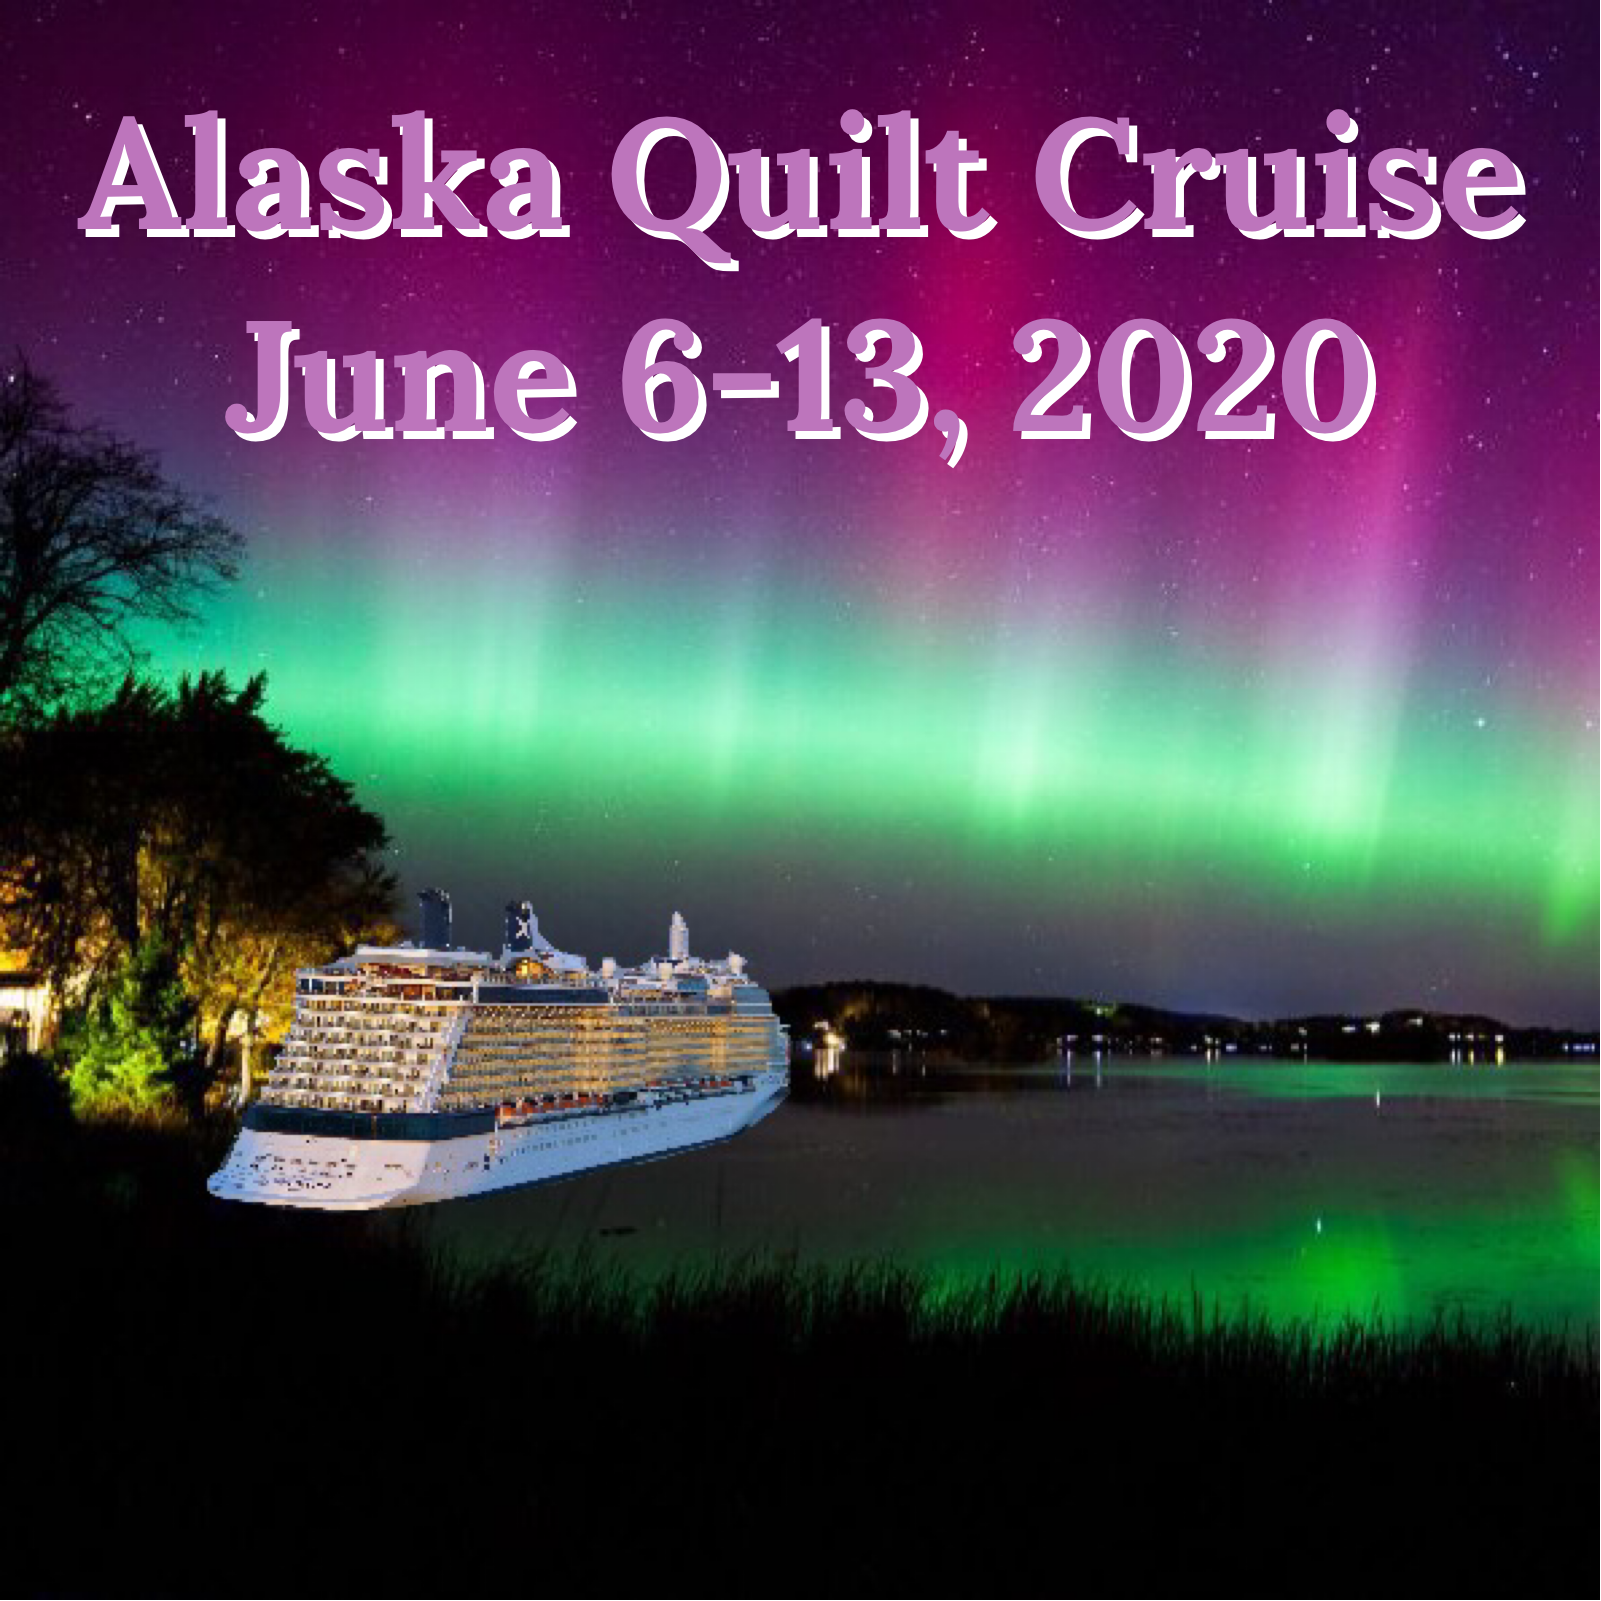 Quilt Cruise to Alaska